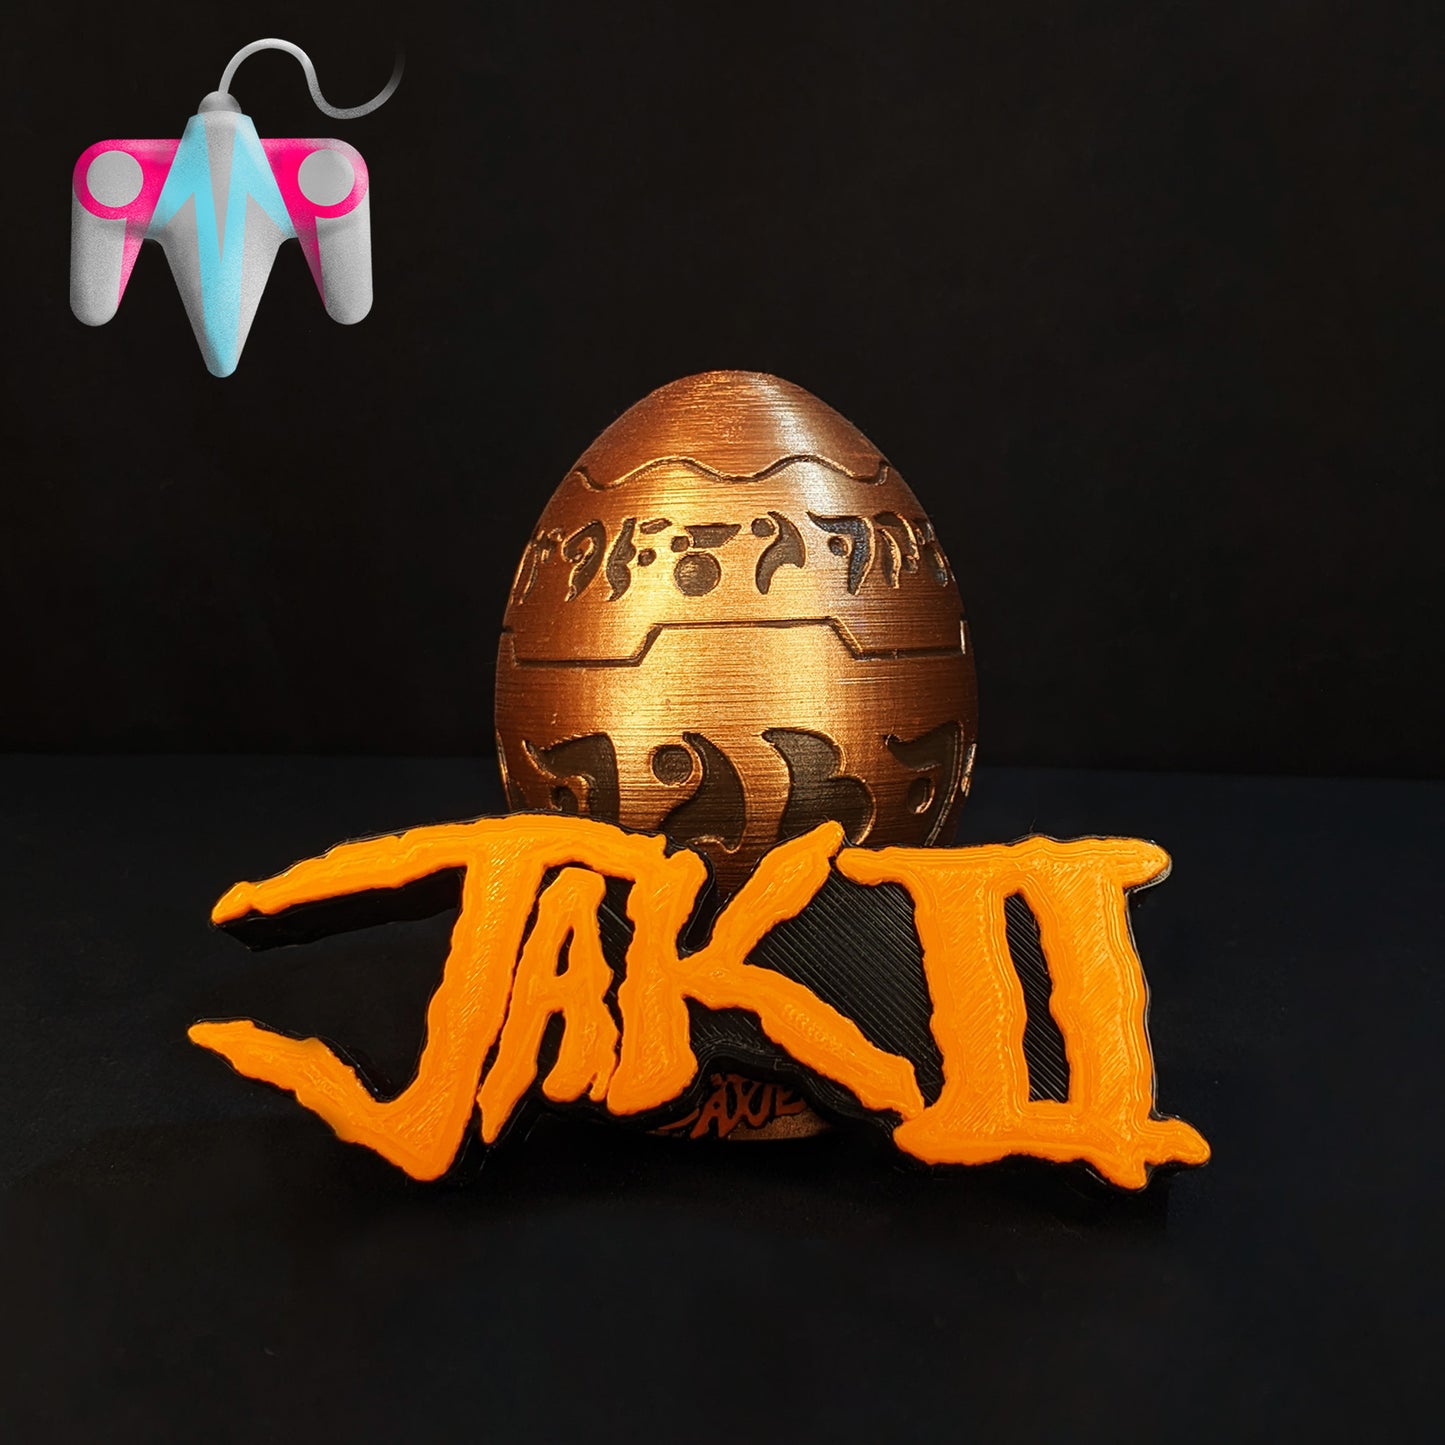 3D Printed Jak II Wall/Shelf Decor (FREE SHIPPING)